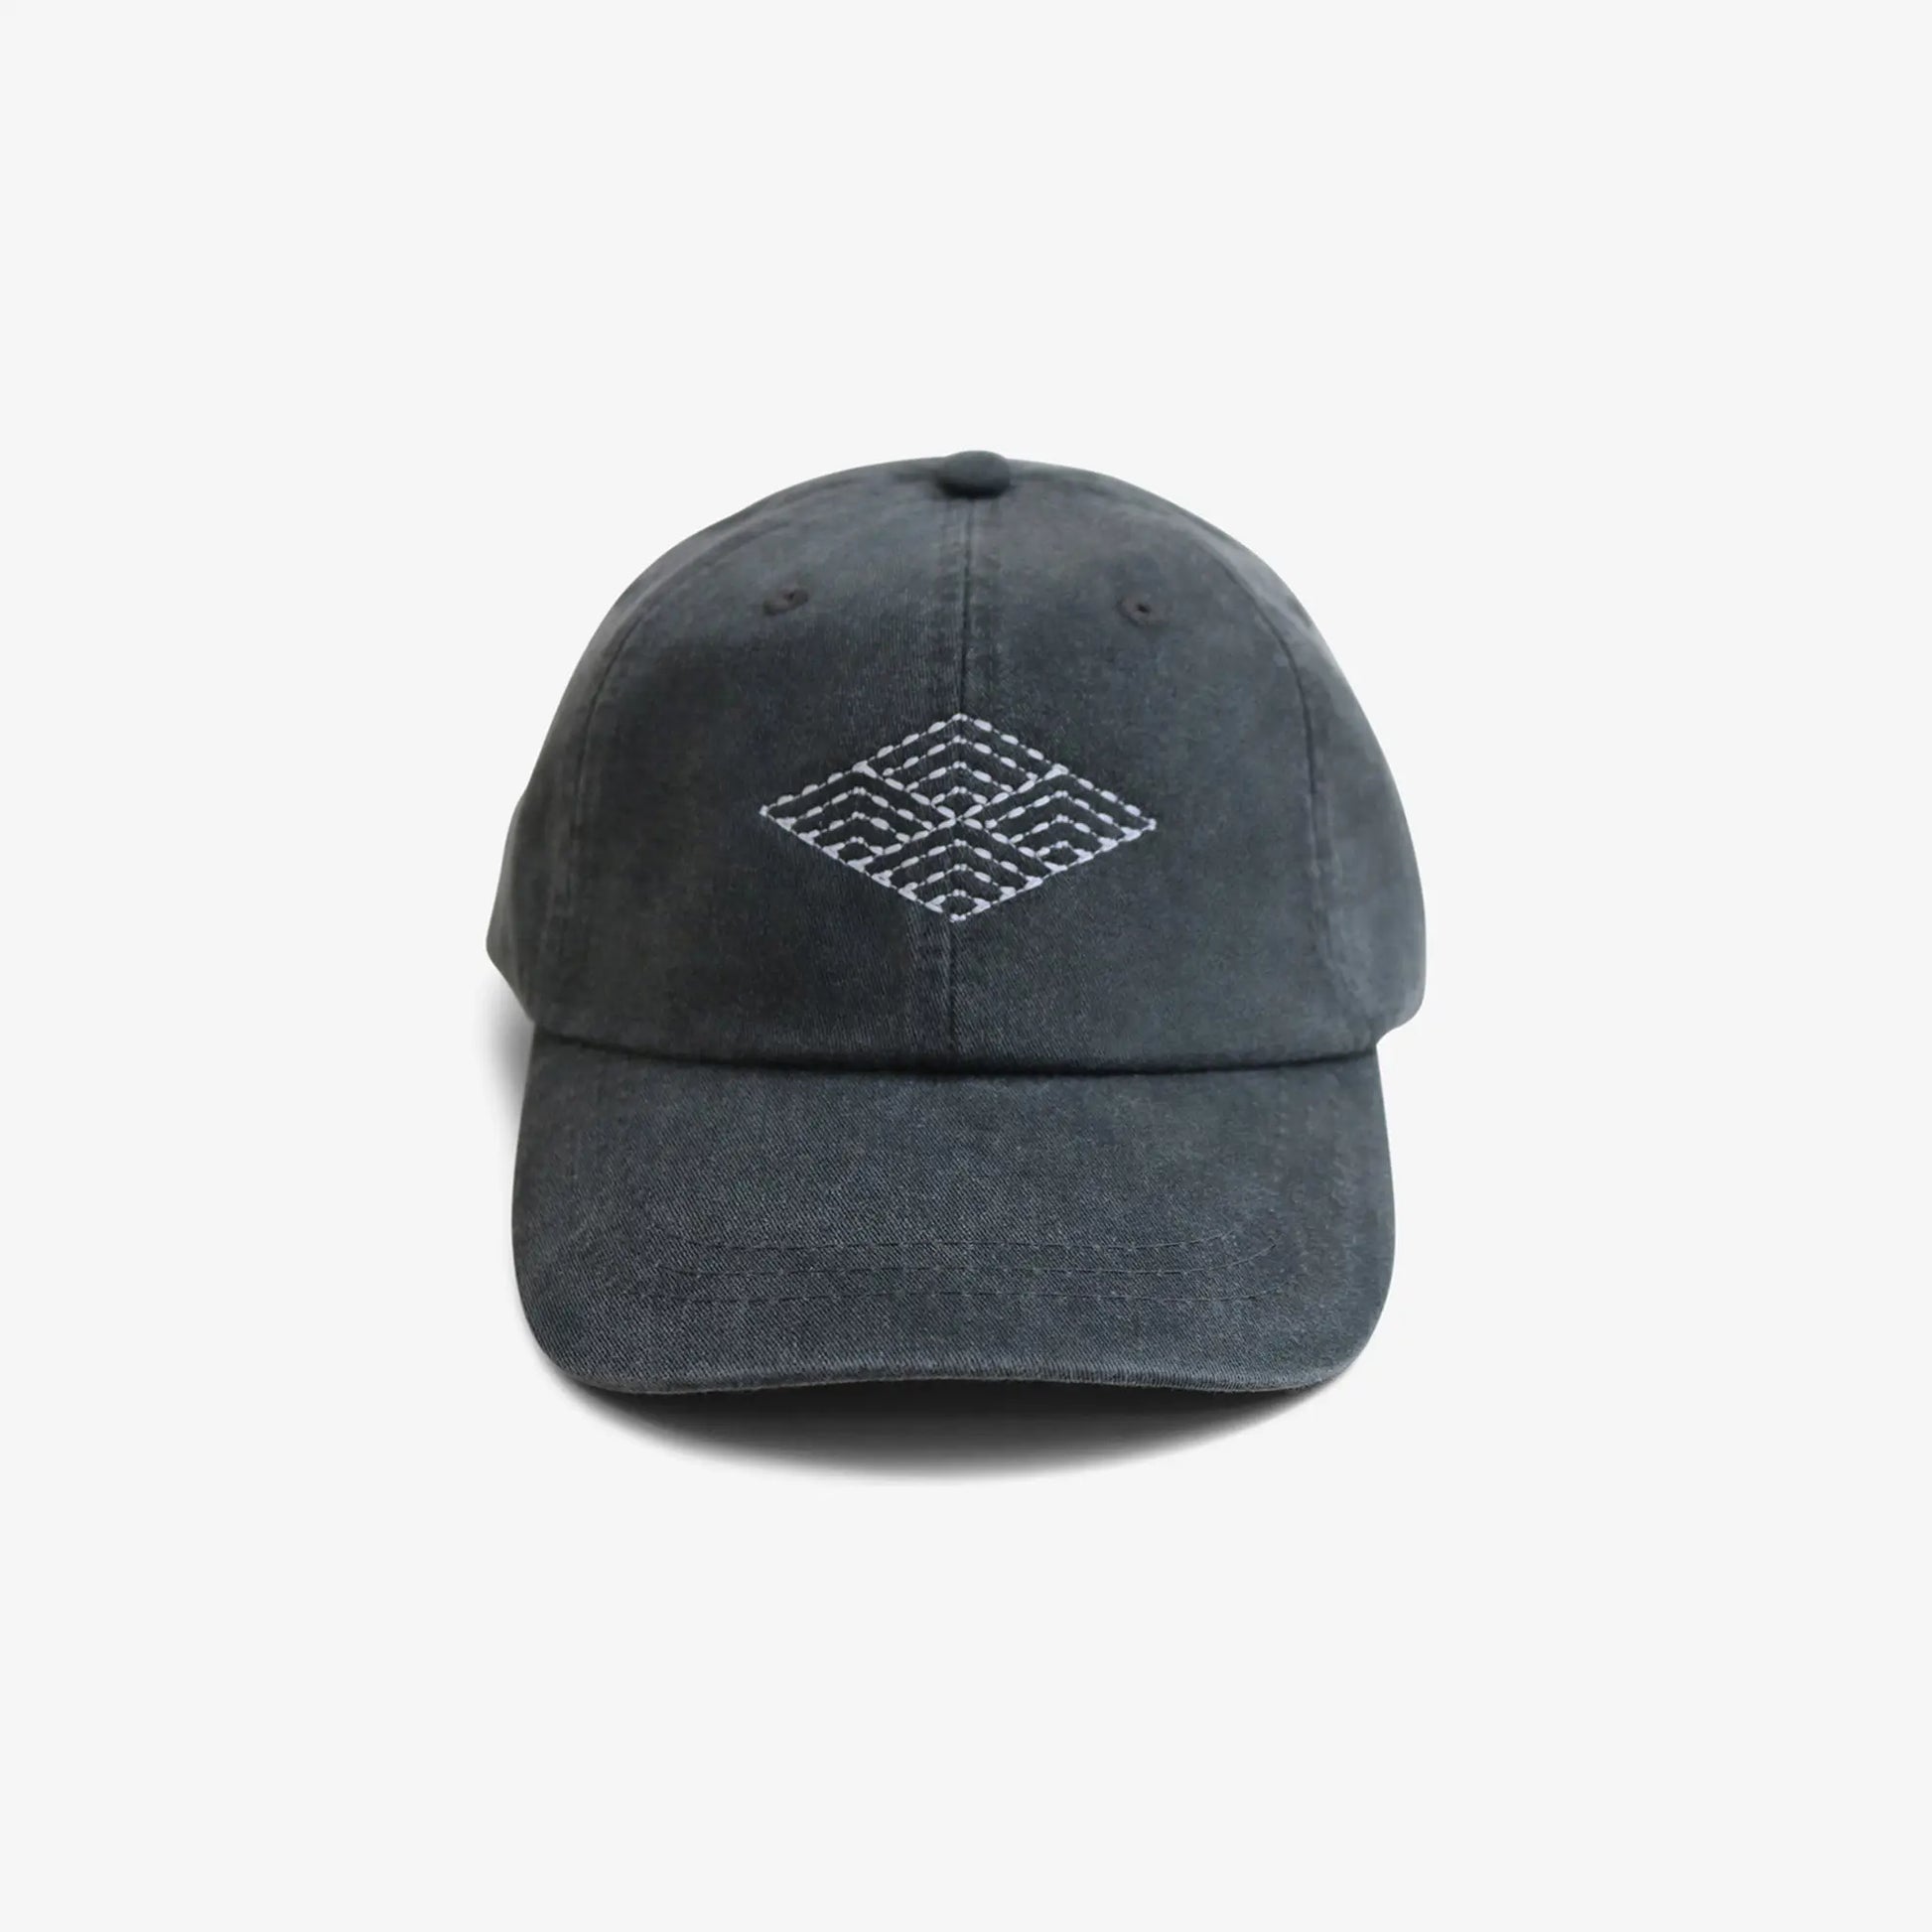 Sashiko Hat Black Japanese Dyed Design Cap